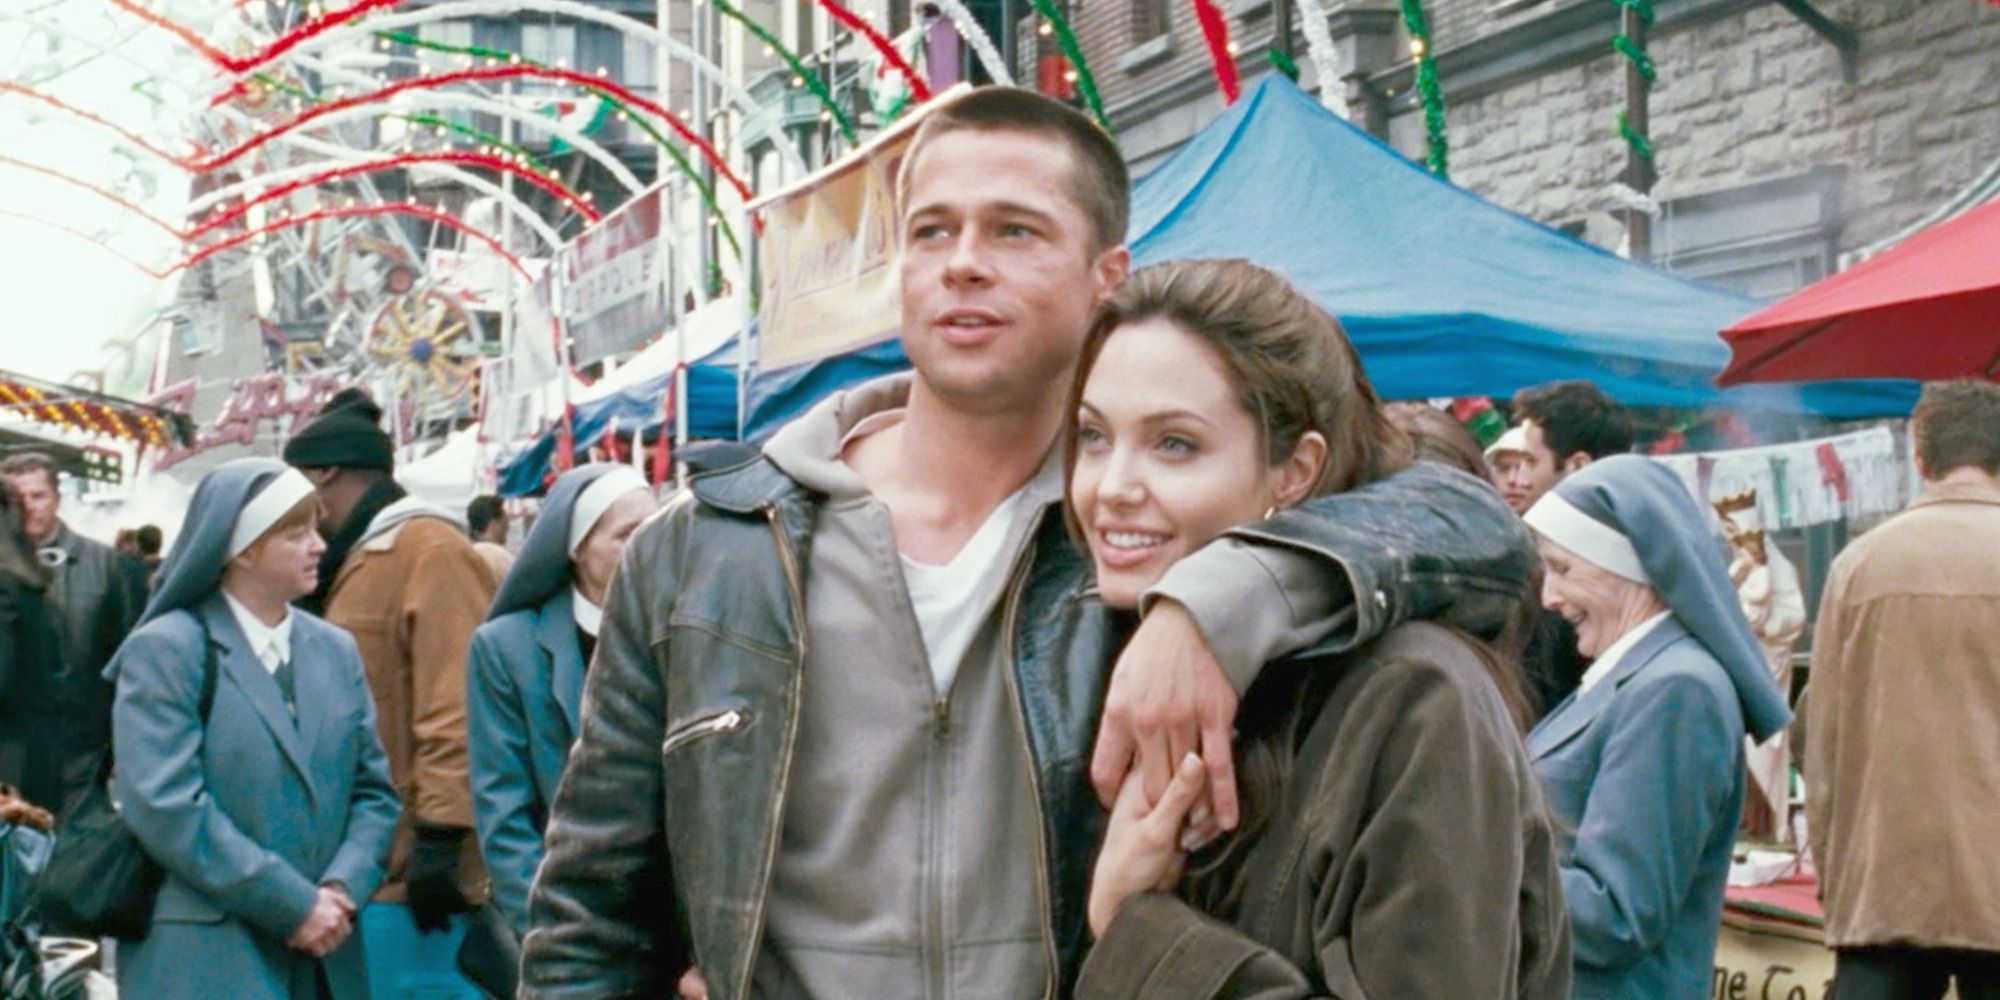 John (Brad Pitt) and Jane (Angelina Jolie) embrace on Mr. & Mrs. Smith